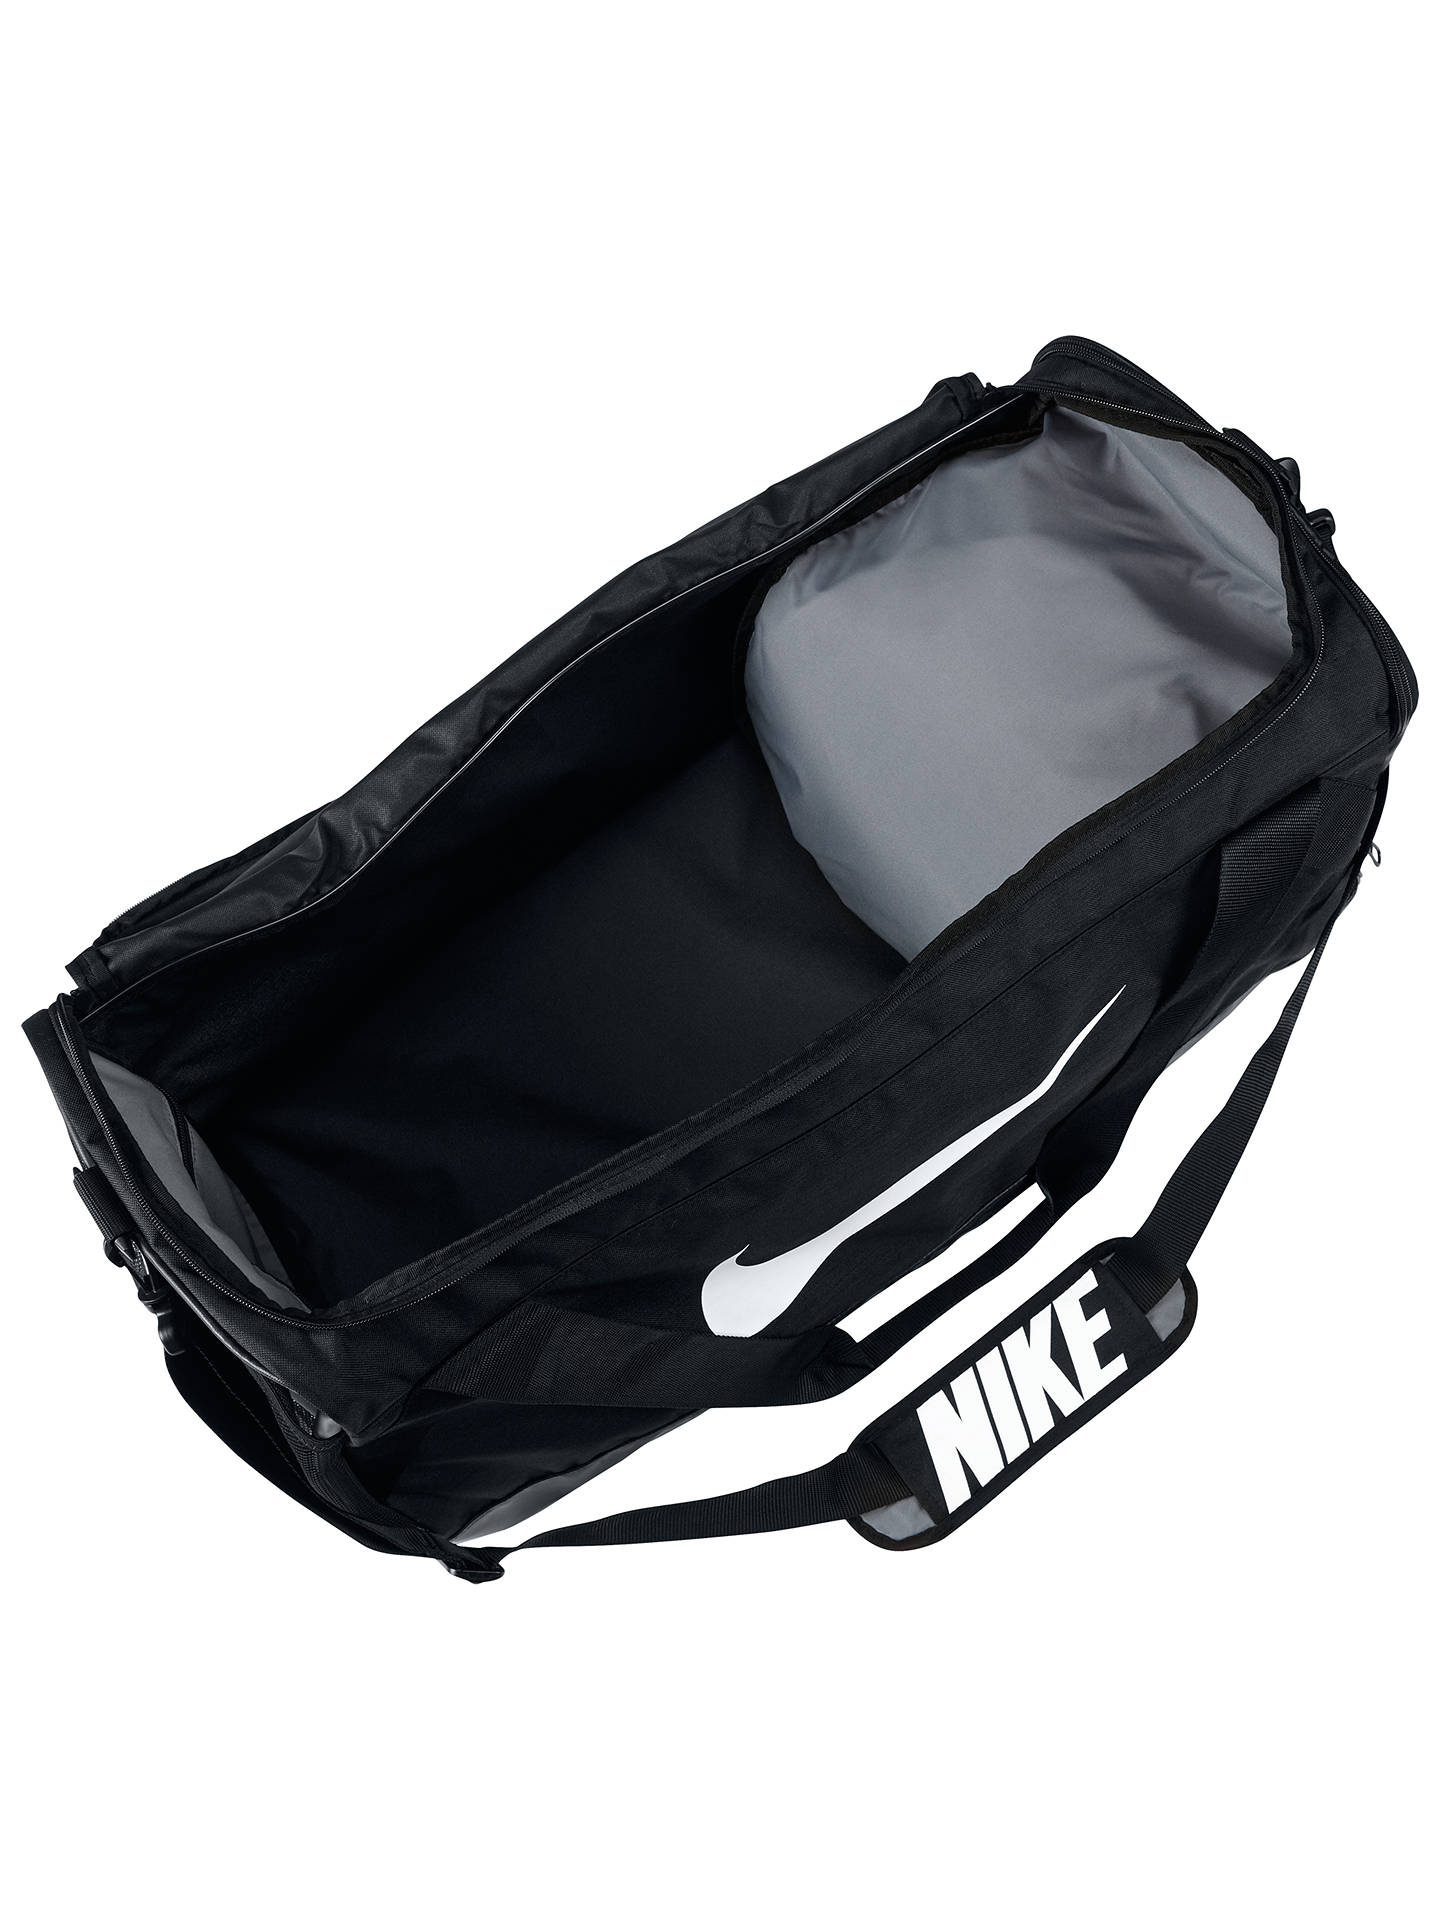 Nike Brasilia Large Training Duffle Bag, Black at John Lewis & Partners